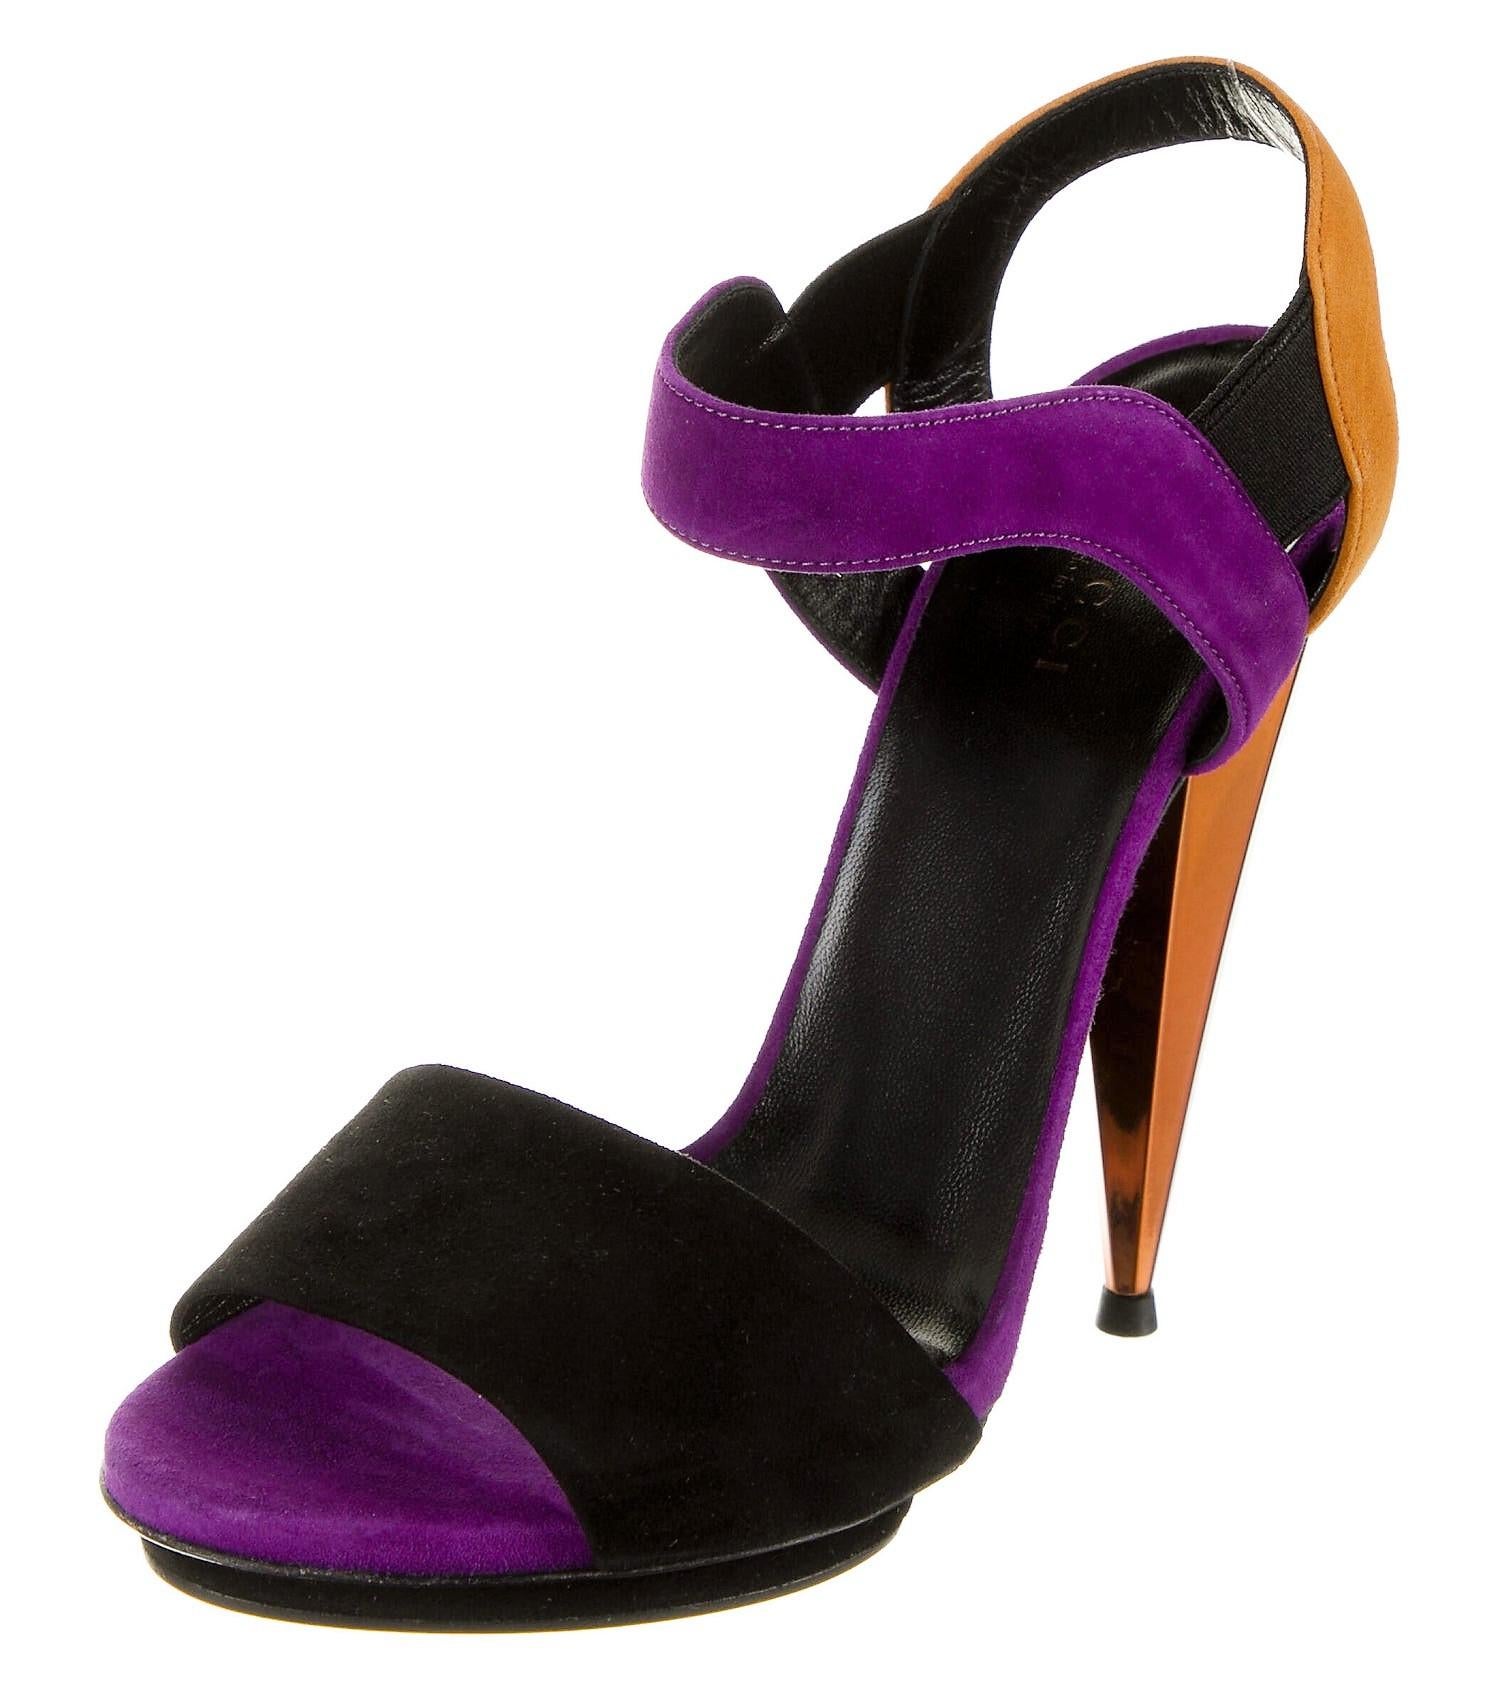 New Gucci Ad Runway 2014 Purple Orange Suede Mirrored Pump Heels Sz 38.5 For Sale 1